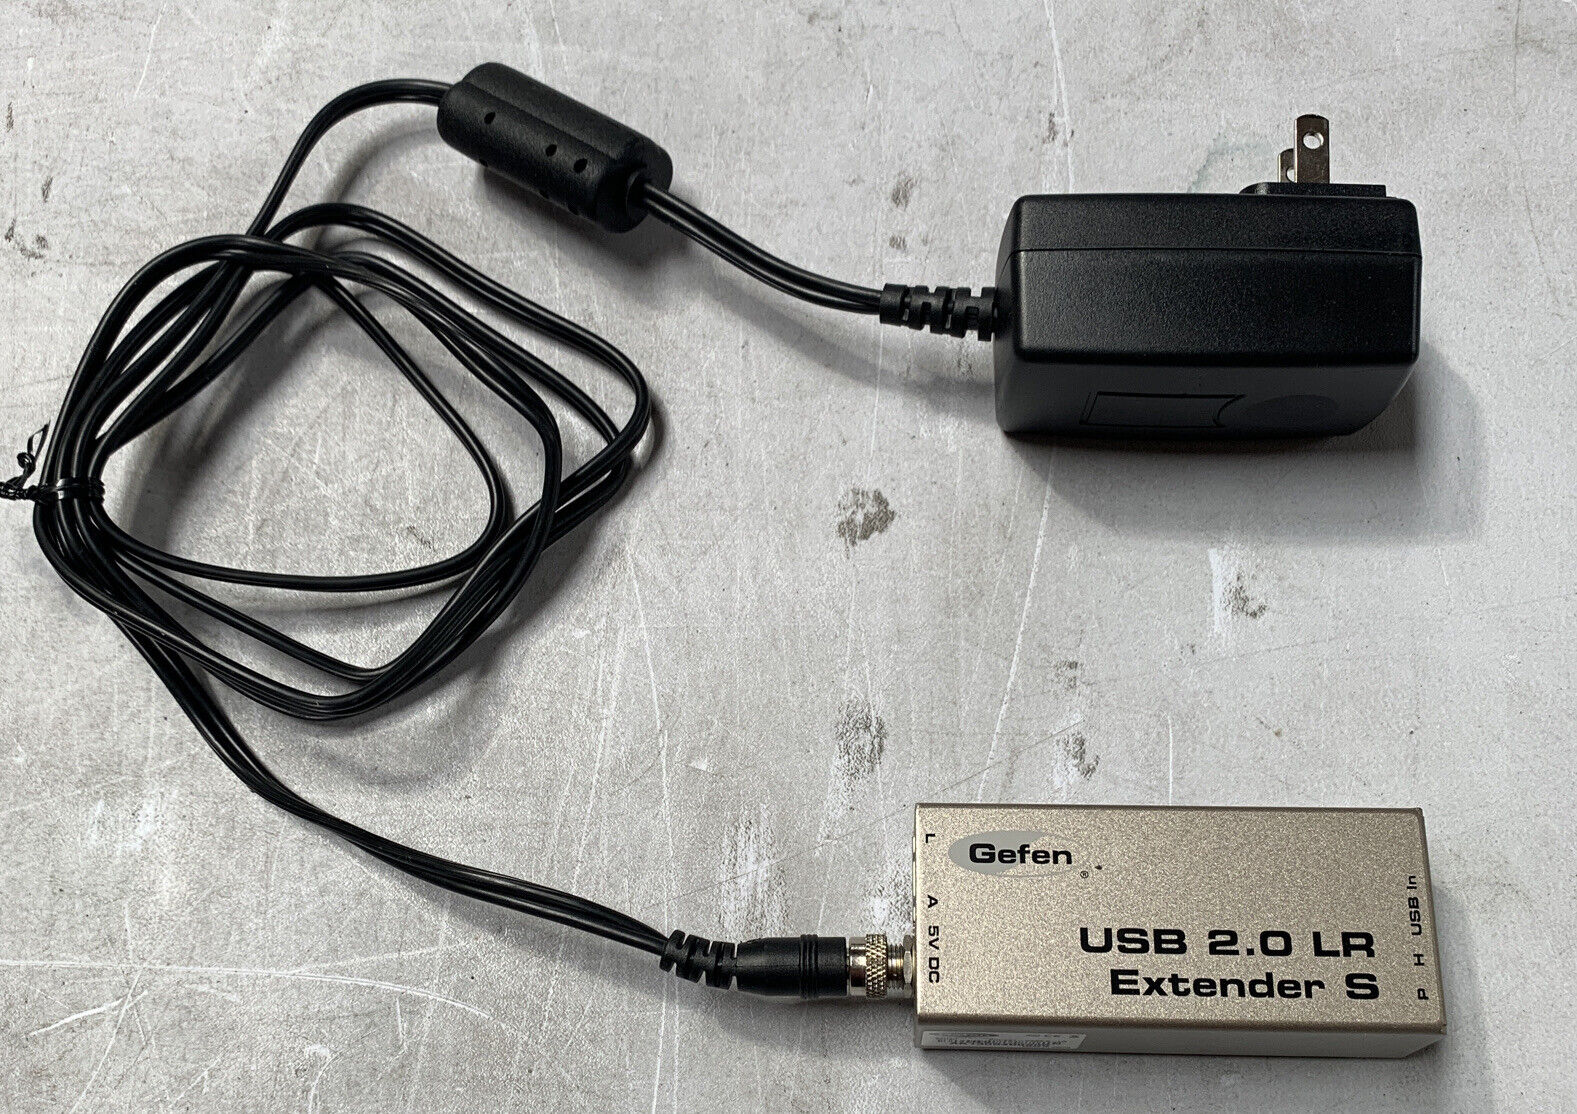 Gefen EXT-USB2.0-LR Cat5 USB 2.0 Extender with Adapter